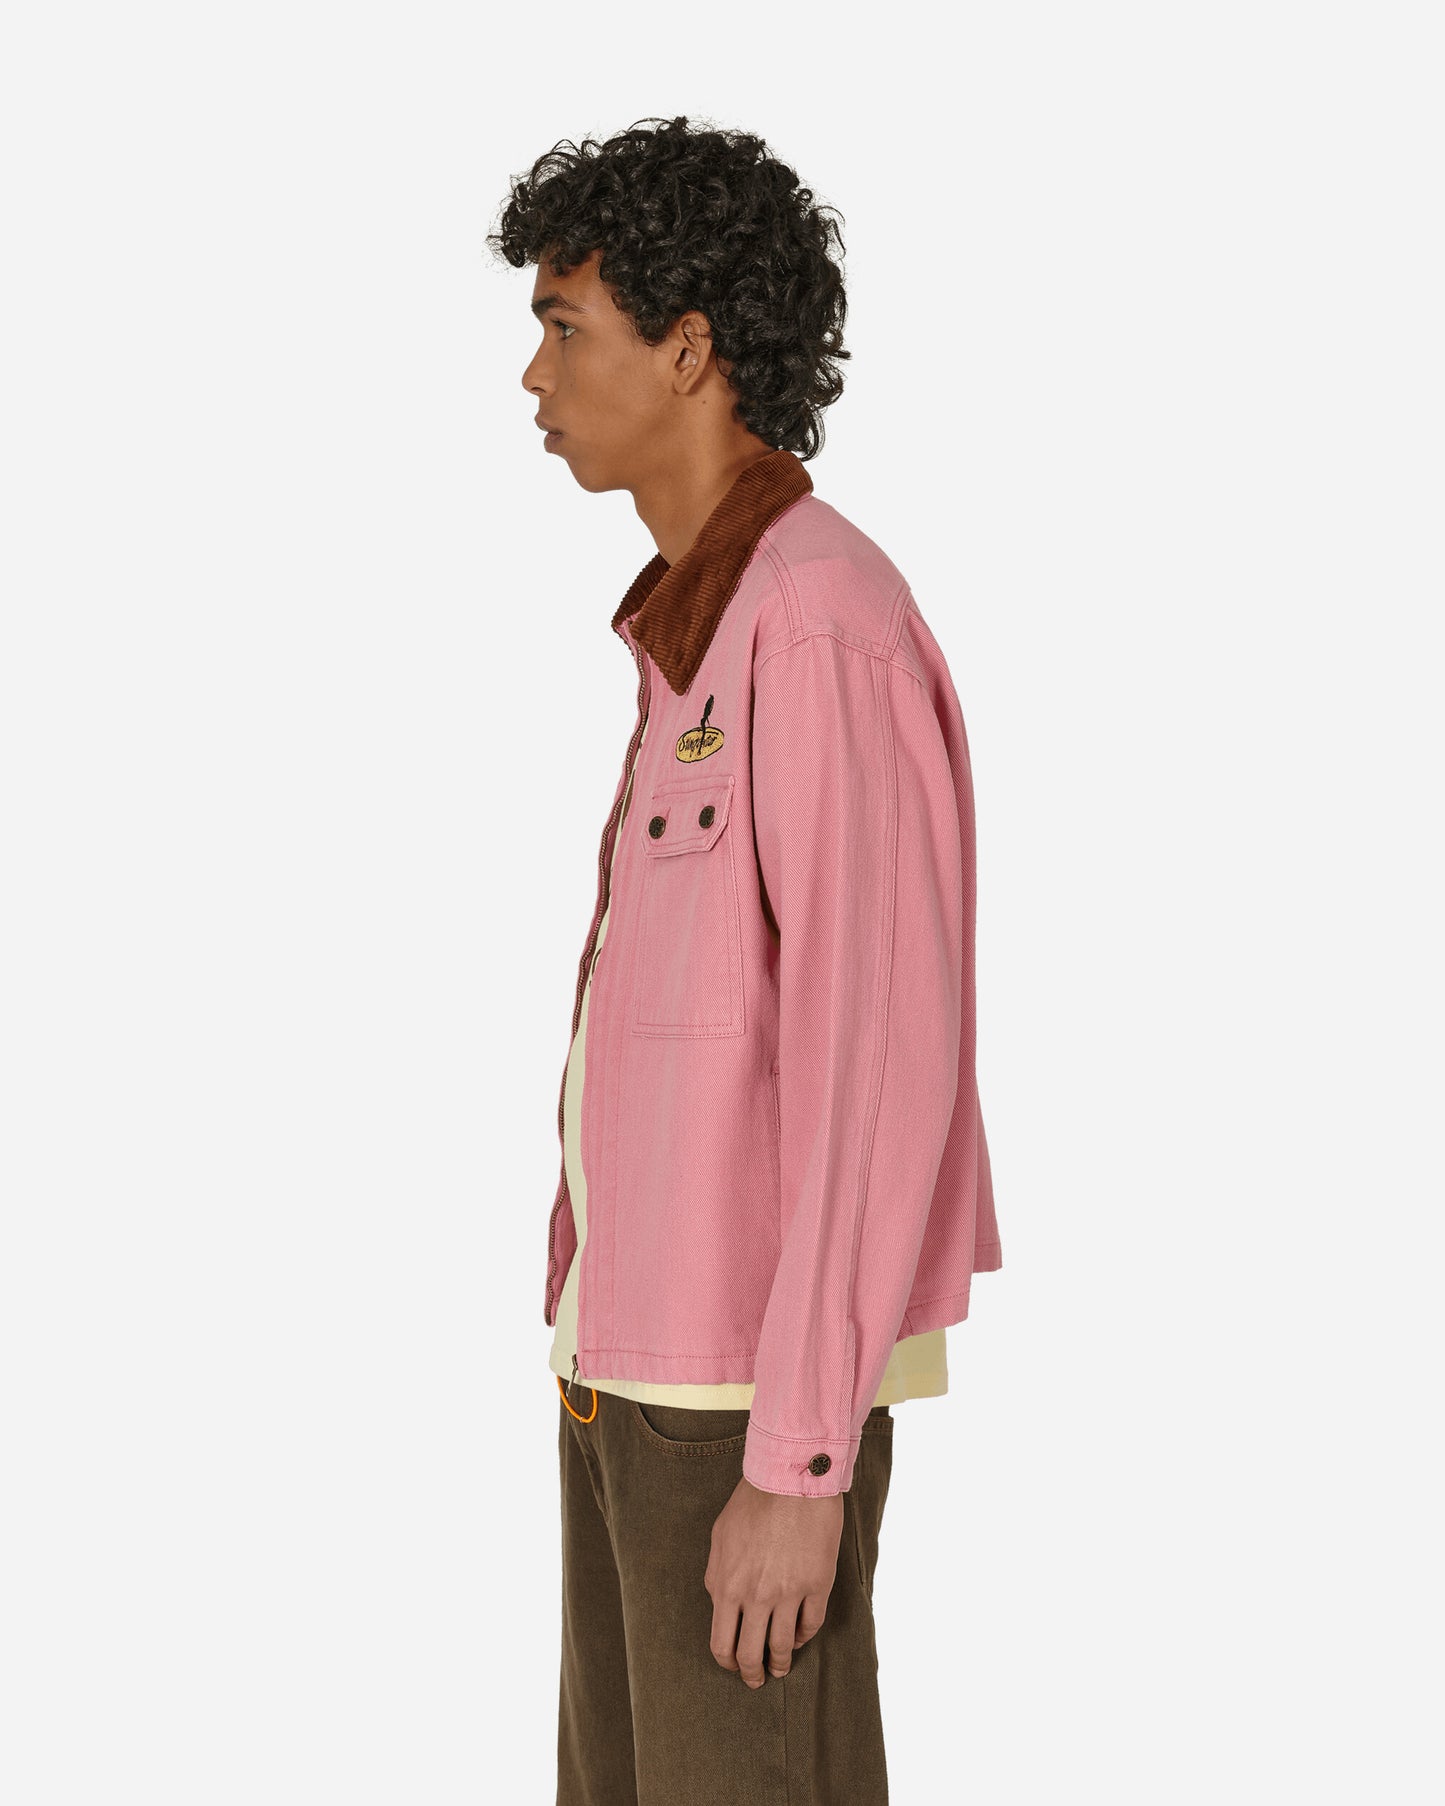 Stingwater Cow Head Jacket Pink Coats and Jackets Jackets COWJKT PNK